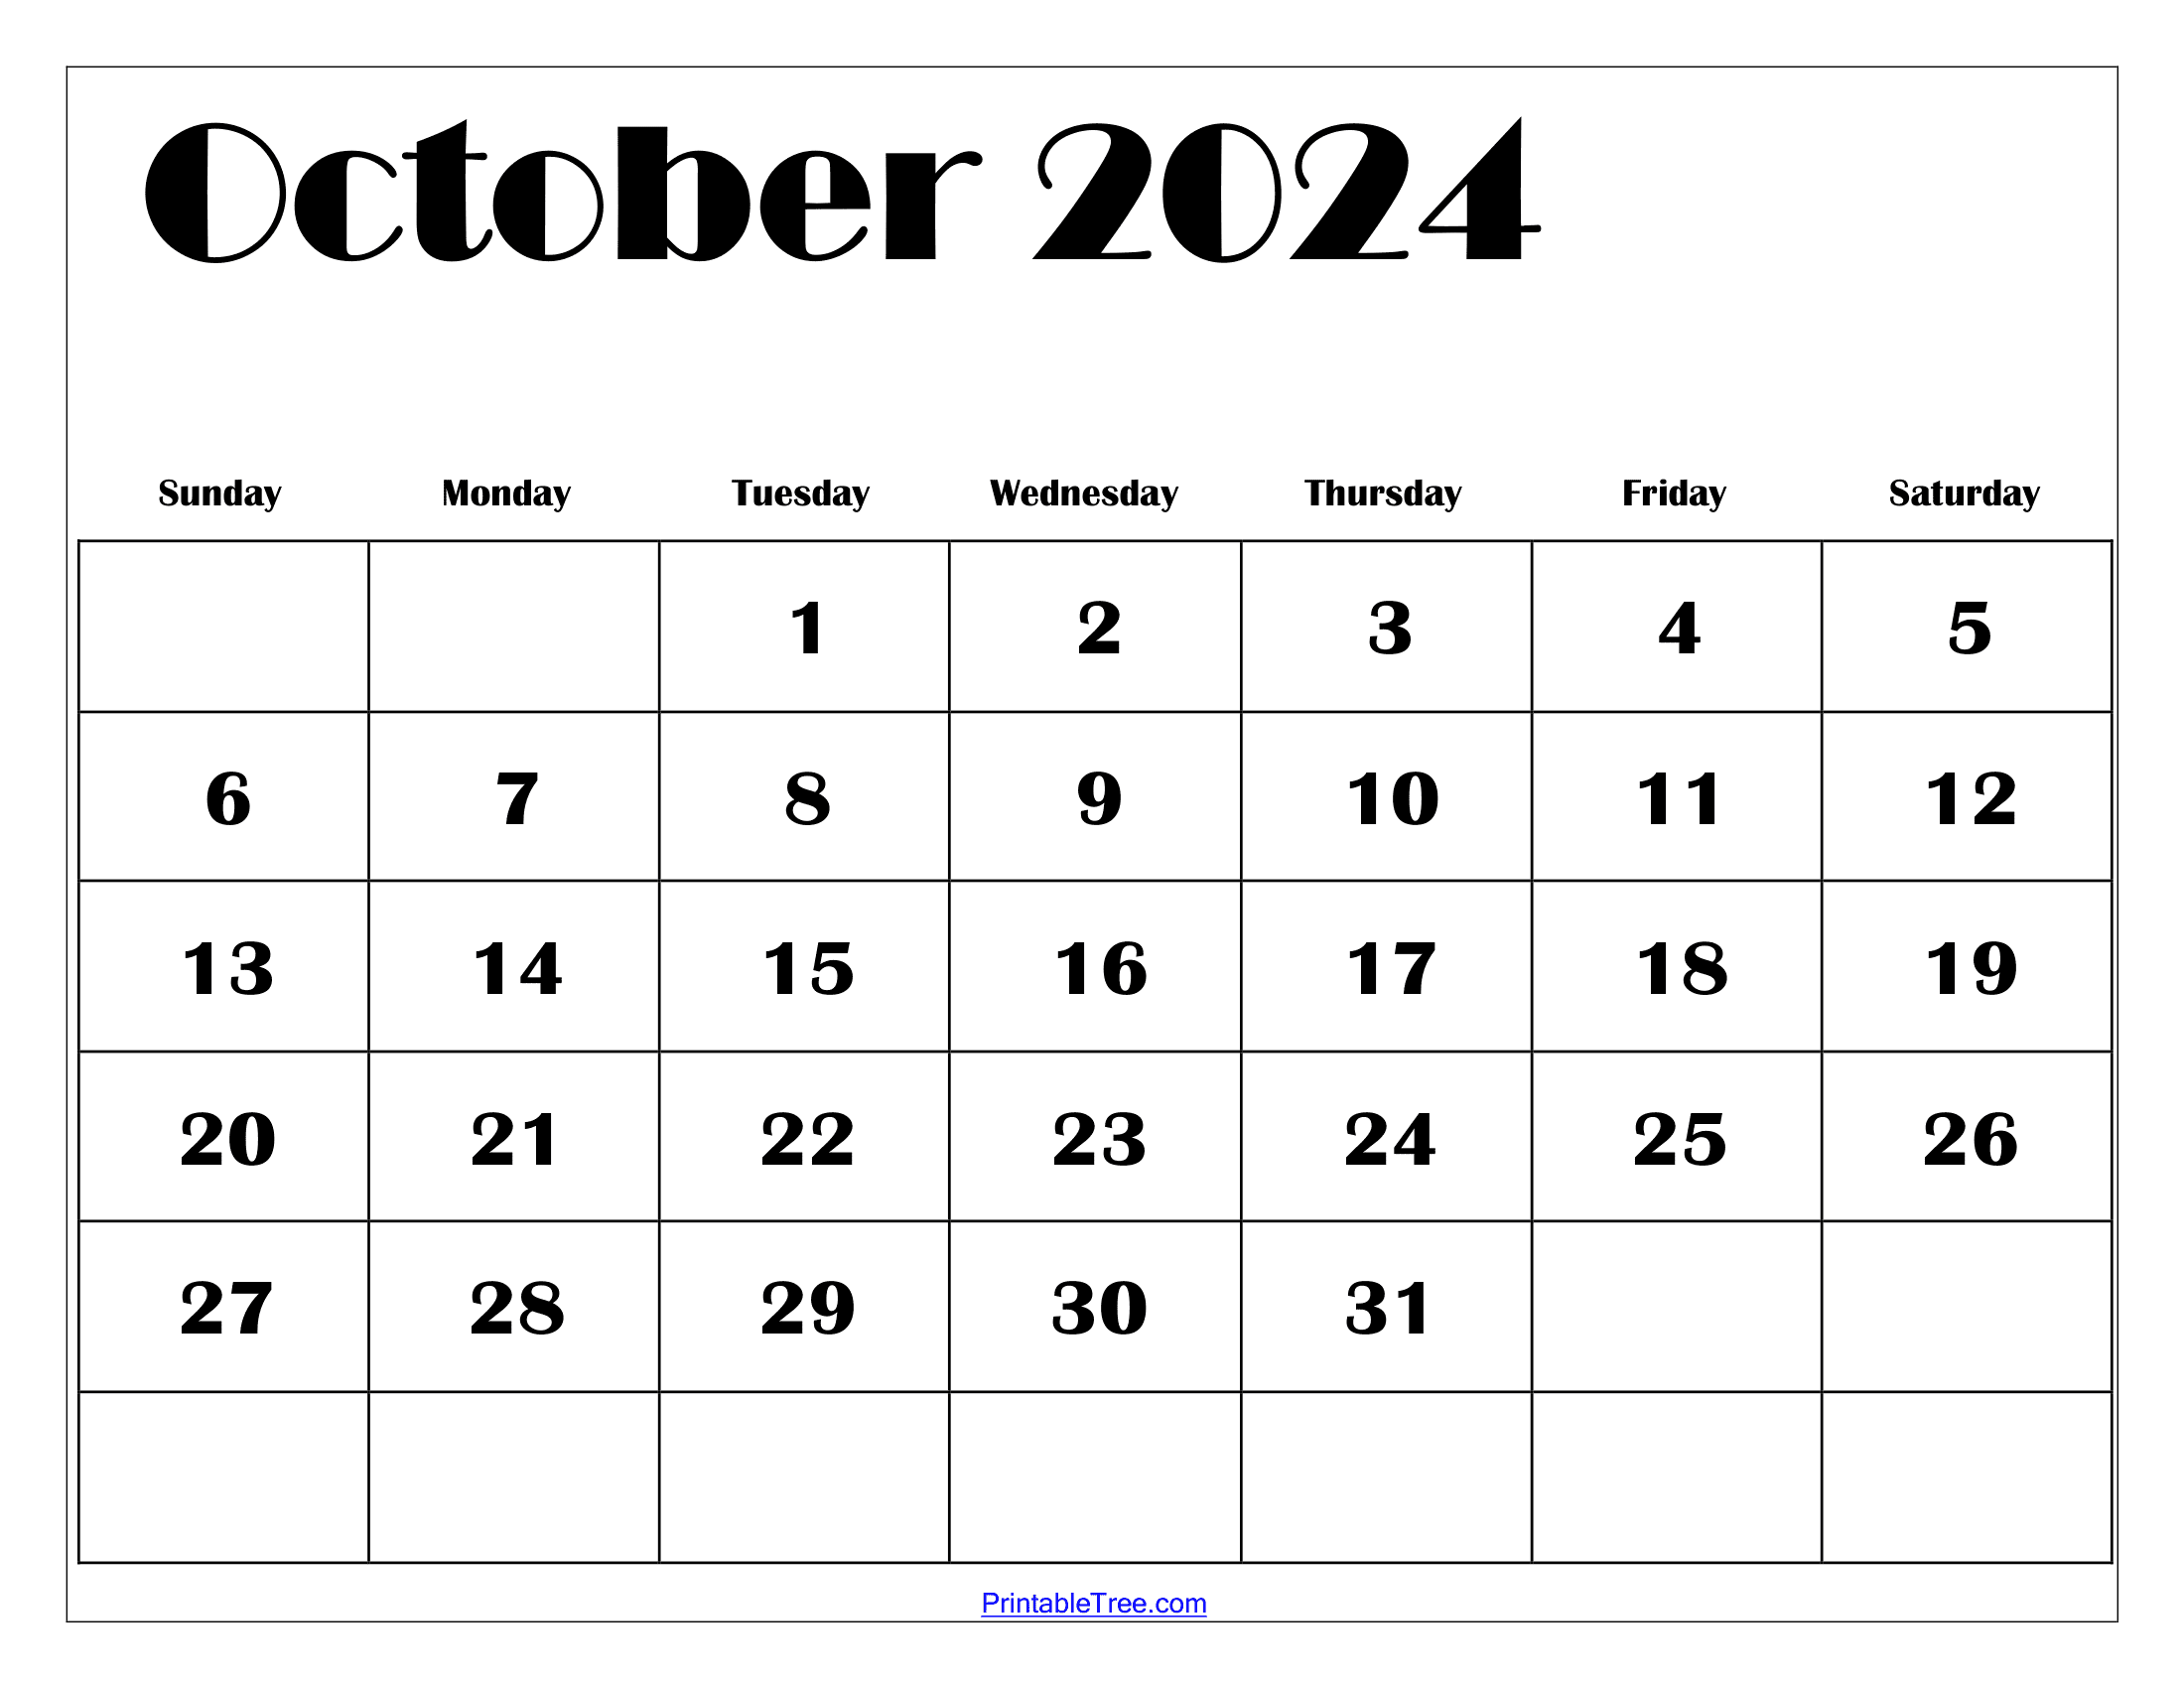 October 2024 Calendar Printable Pdf Free Templates With Holidays for October Printable Calendar 2024